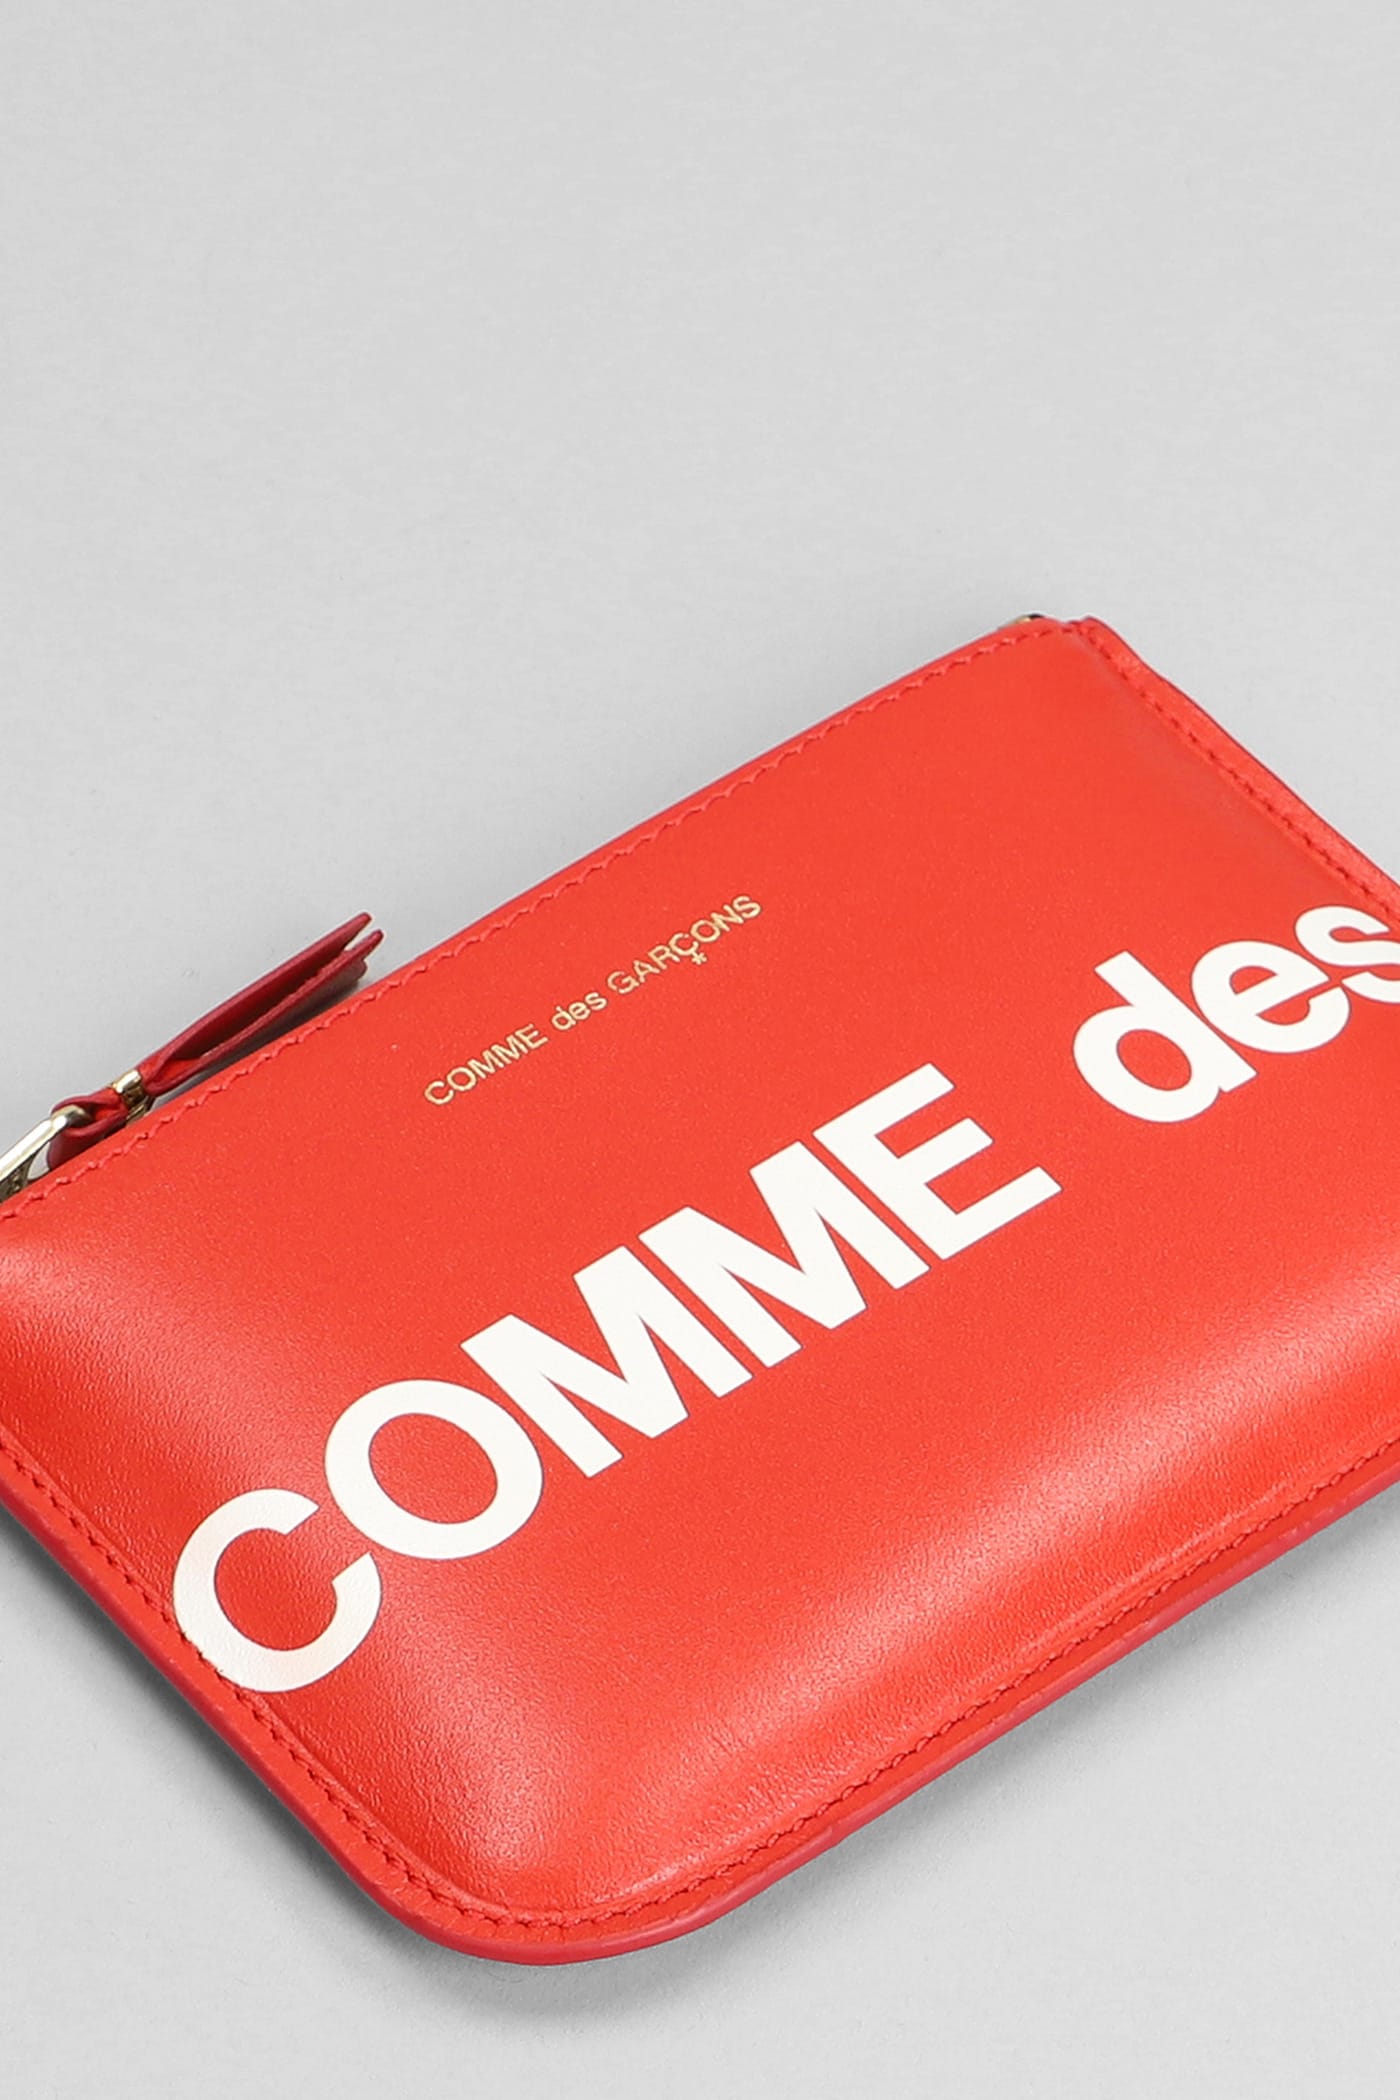 Shop Comme Des Garçons Wallet In Red Leather